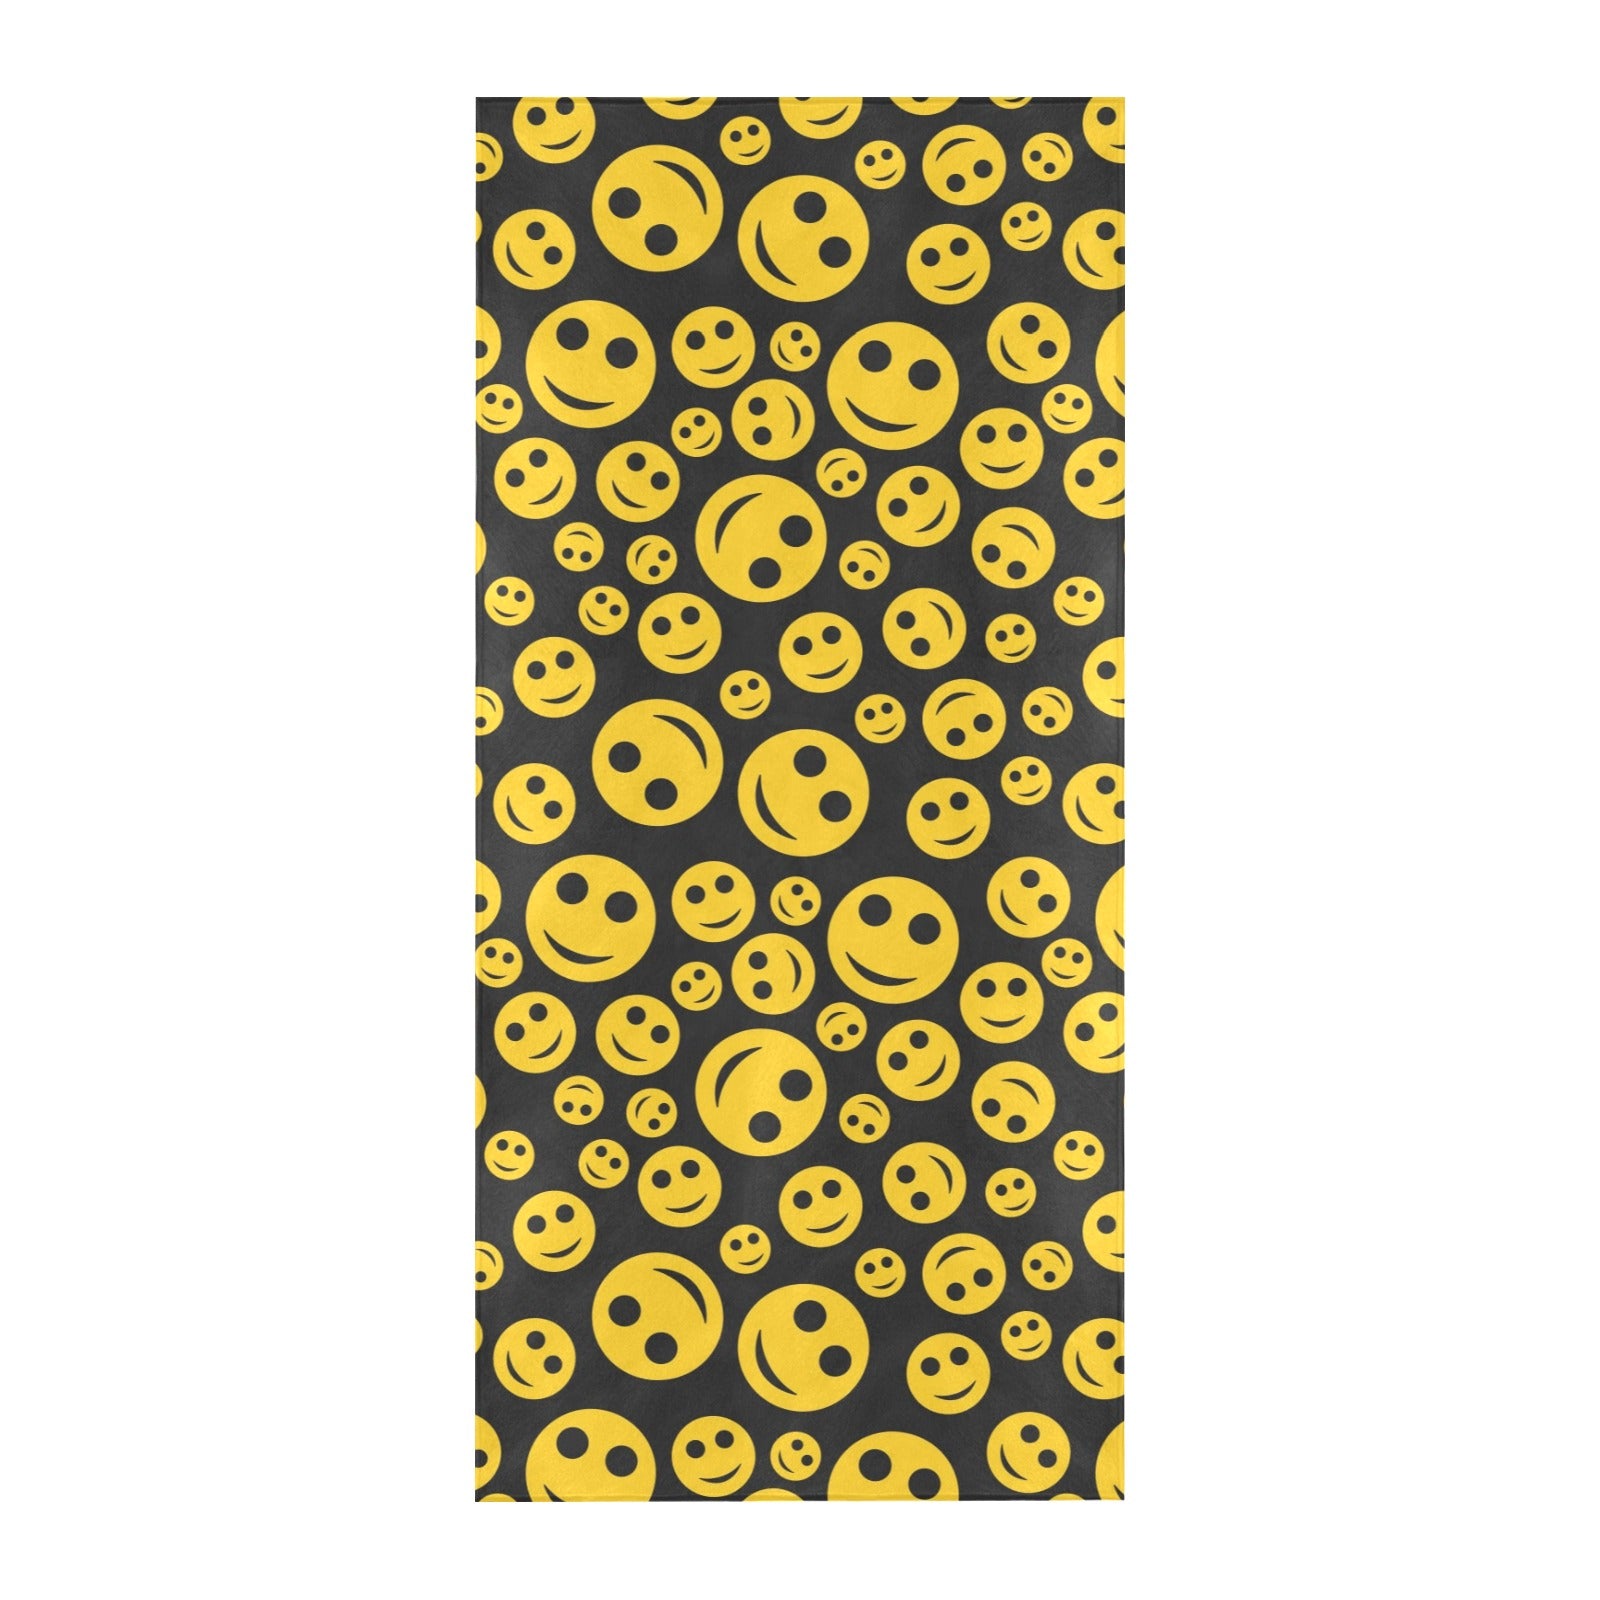 Smiley Face Emoji Print Design LKS304 Beach Towel 32" x 71"